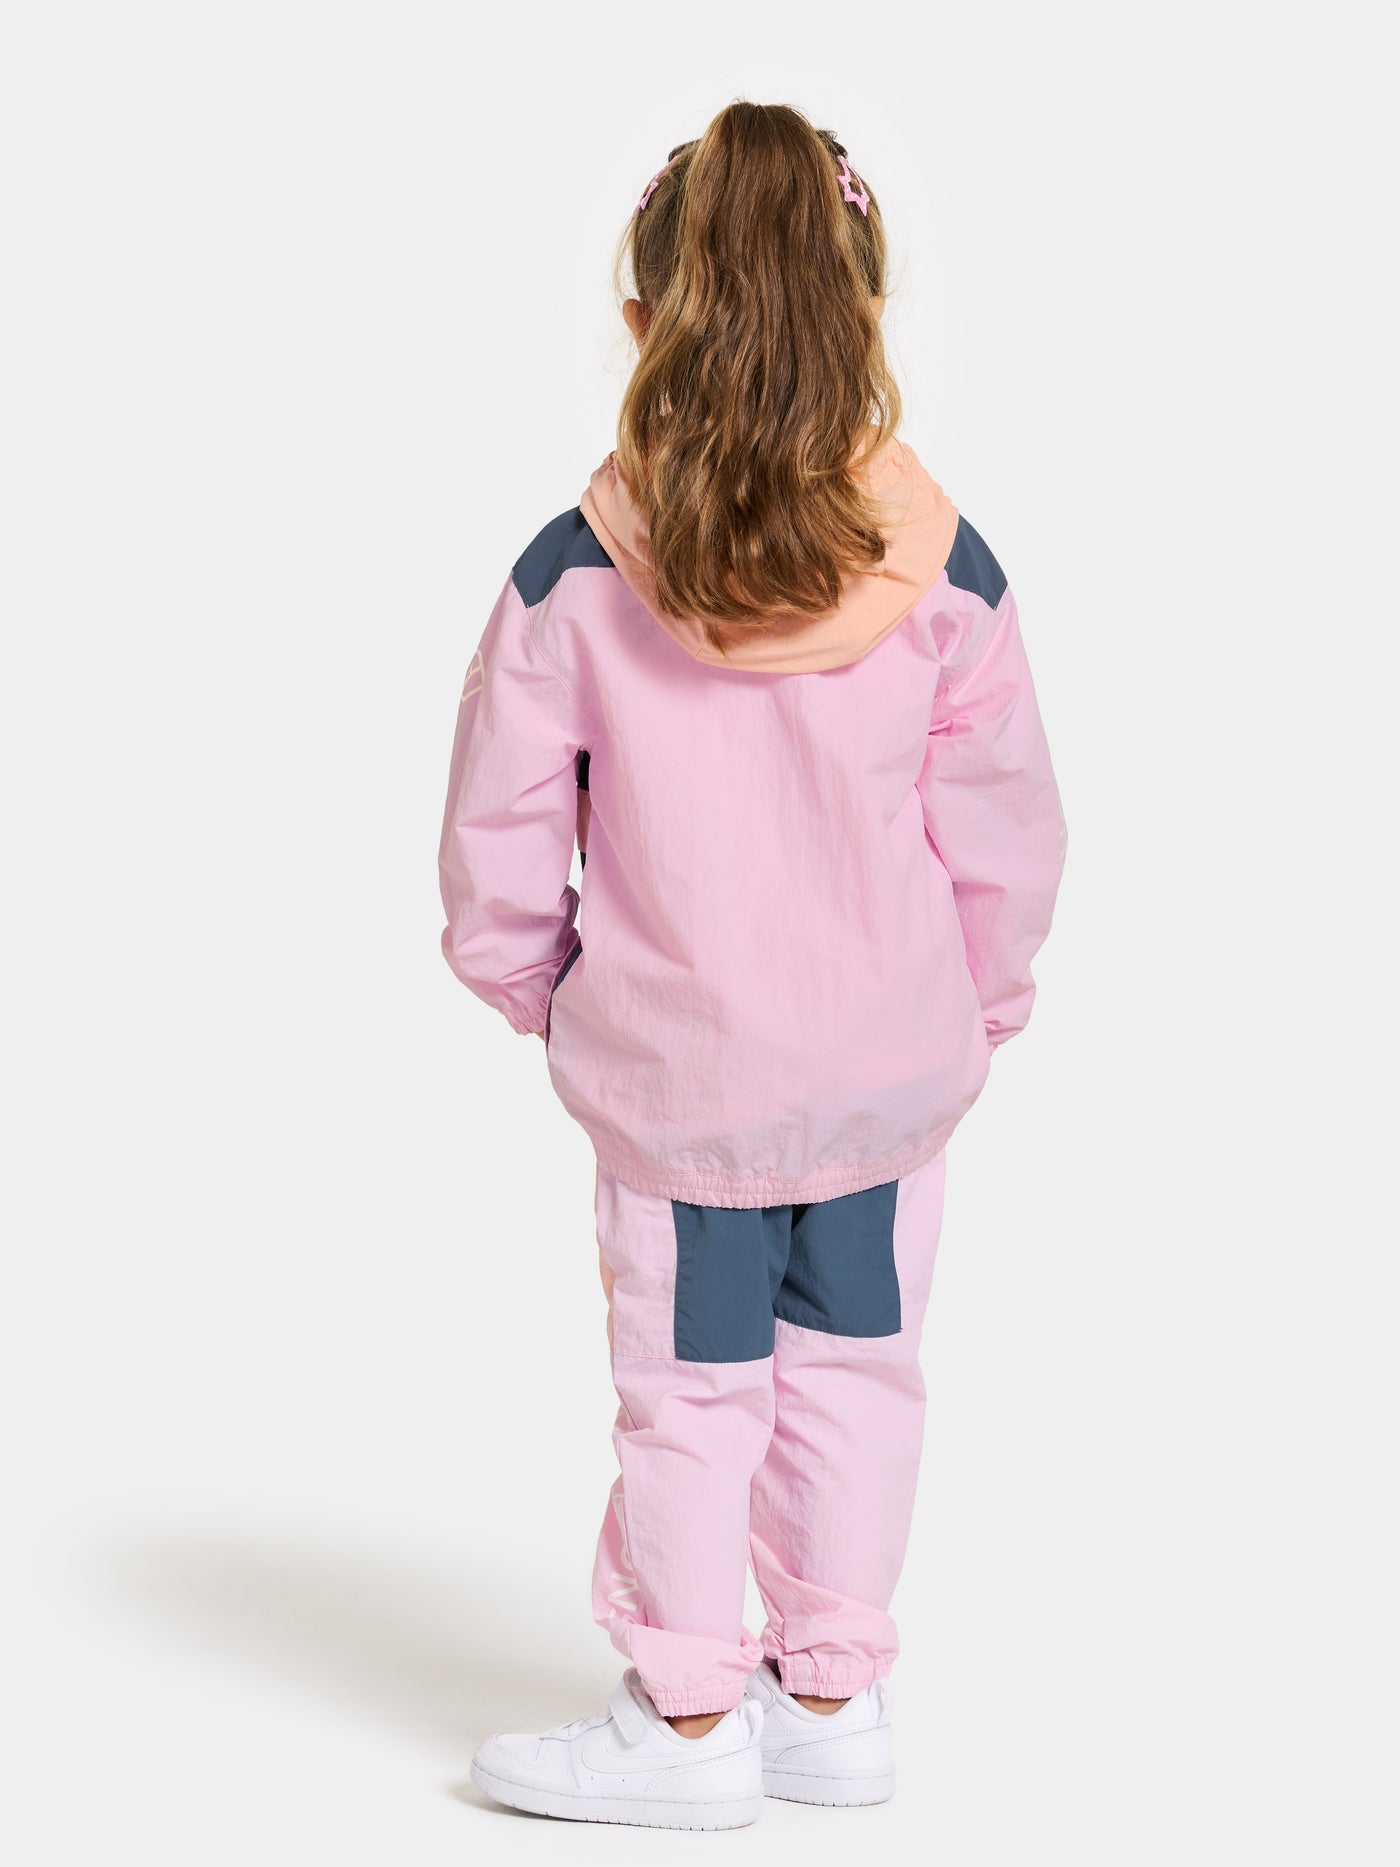 Nypon Kids' Jacket – Windjacke für Kinder